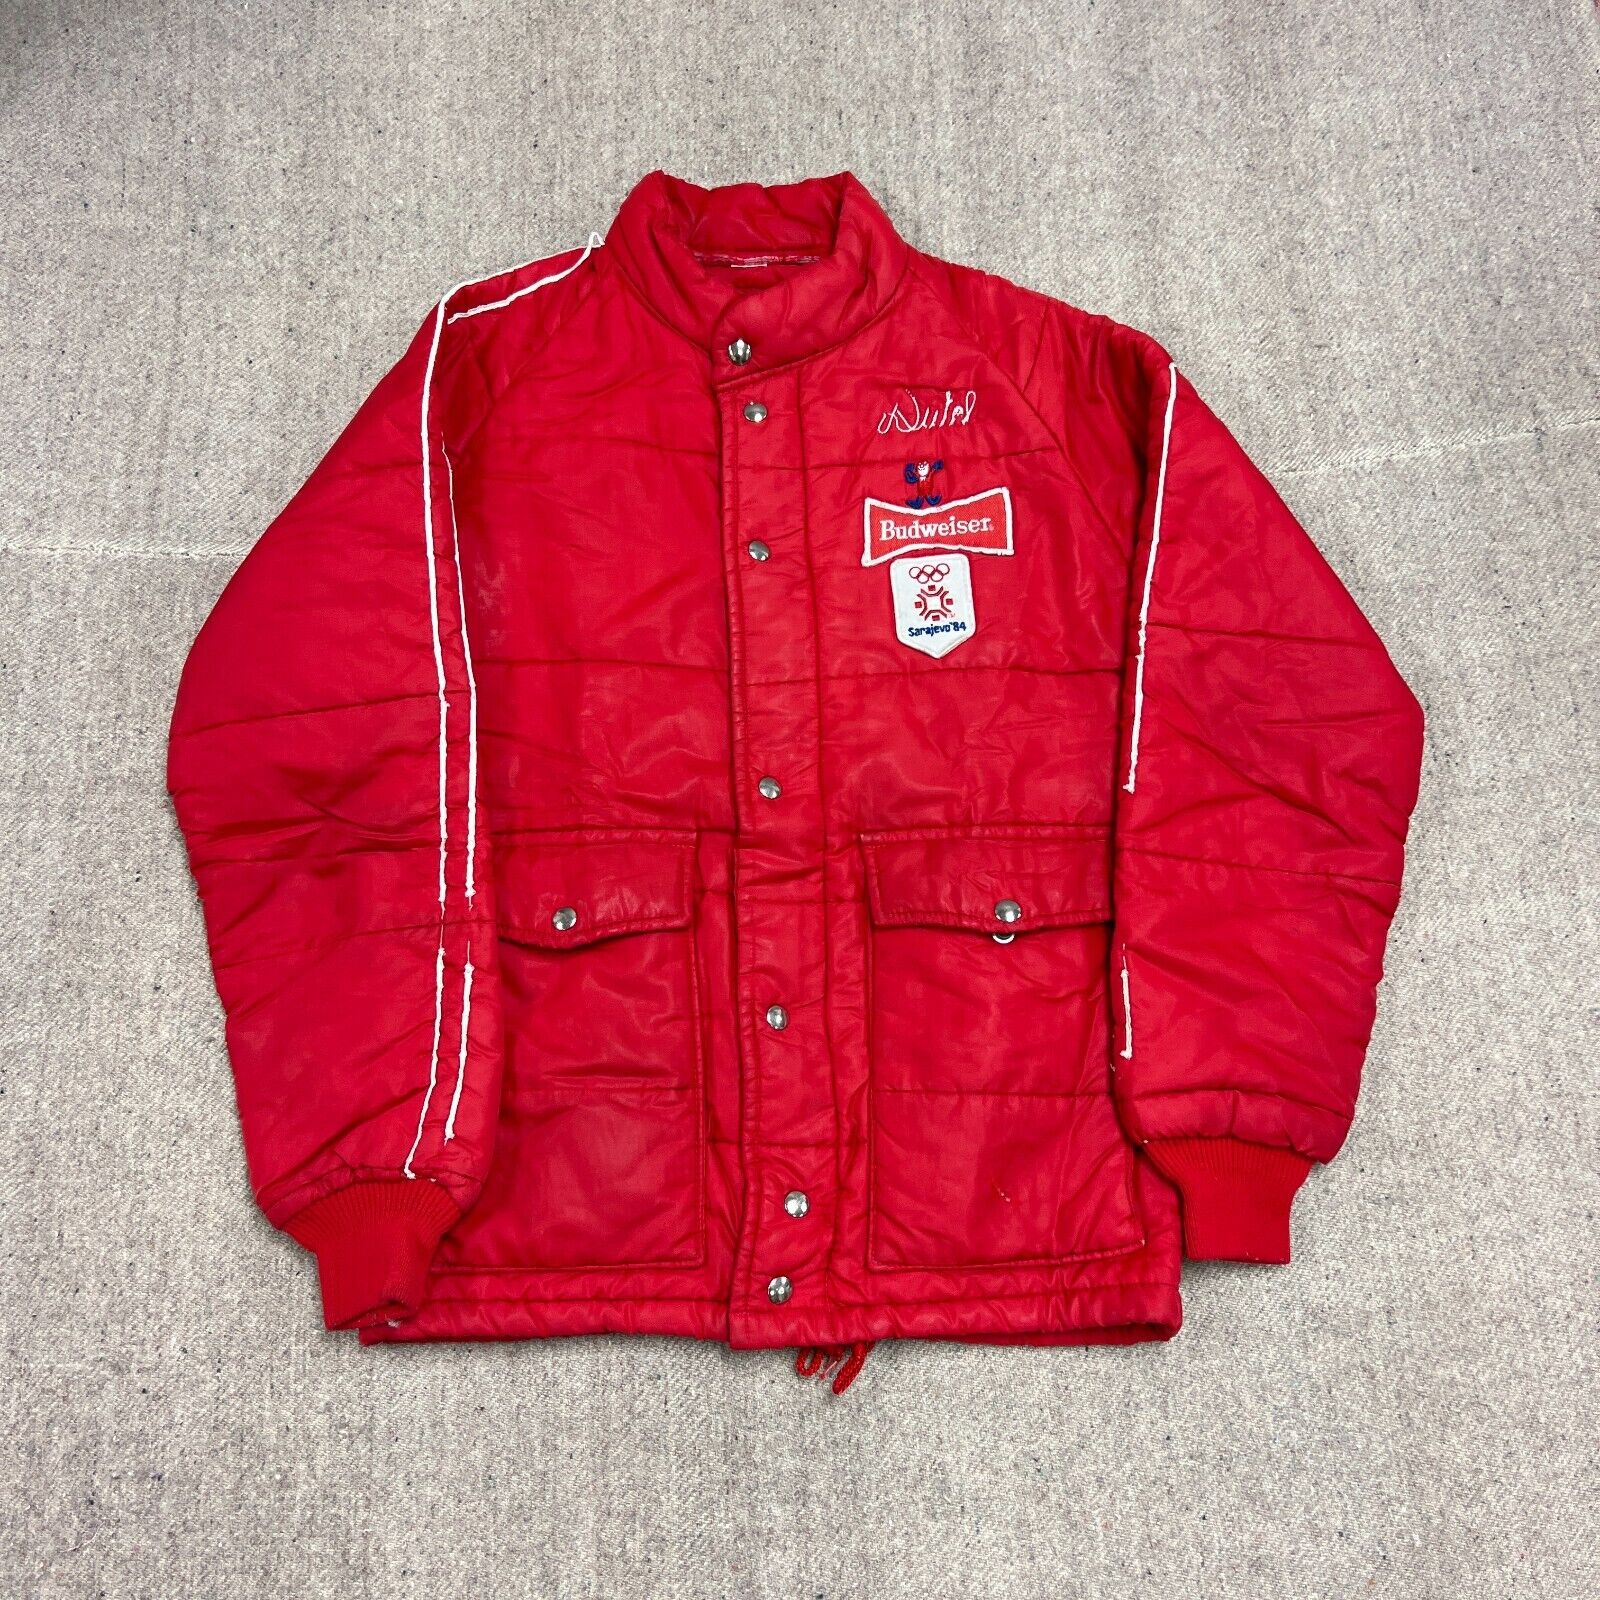 Vintage Sarajevo Olympics Jacket Mens Medium Red 1984 Budweiser Chain Stitch